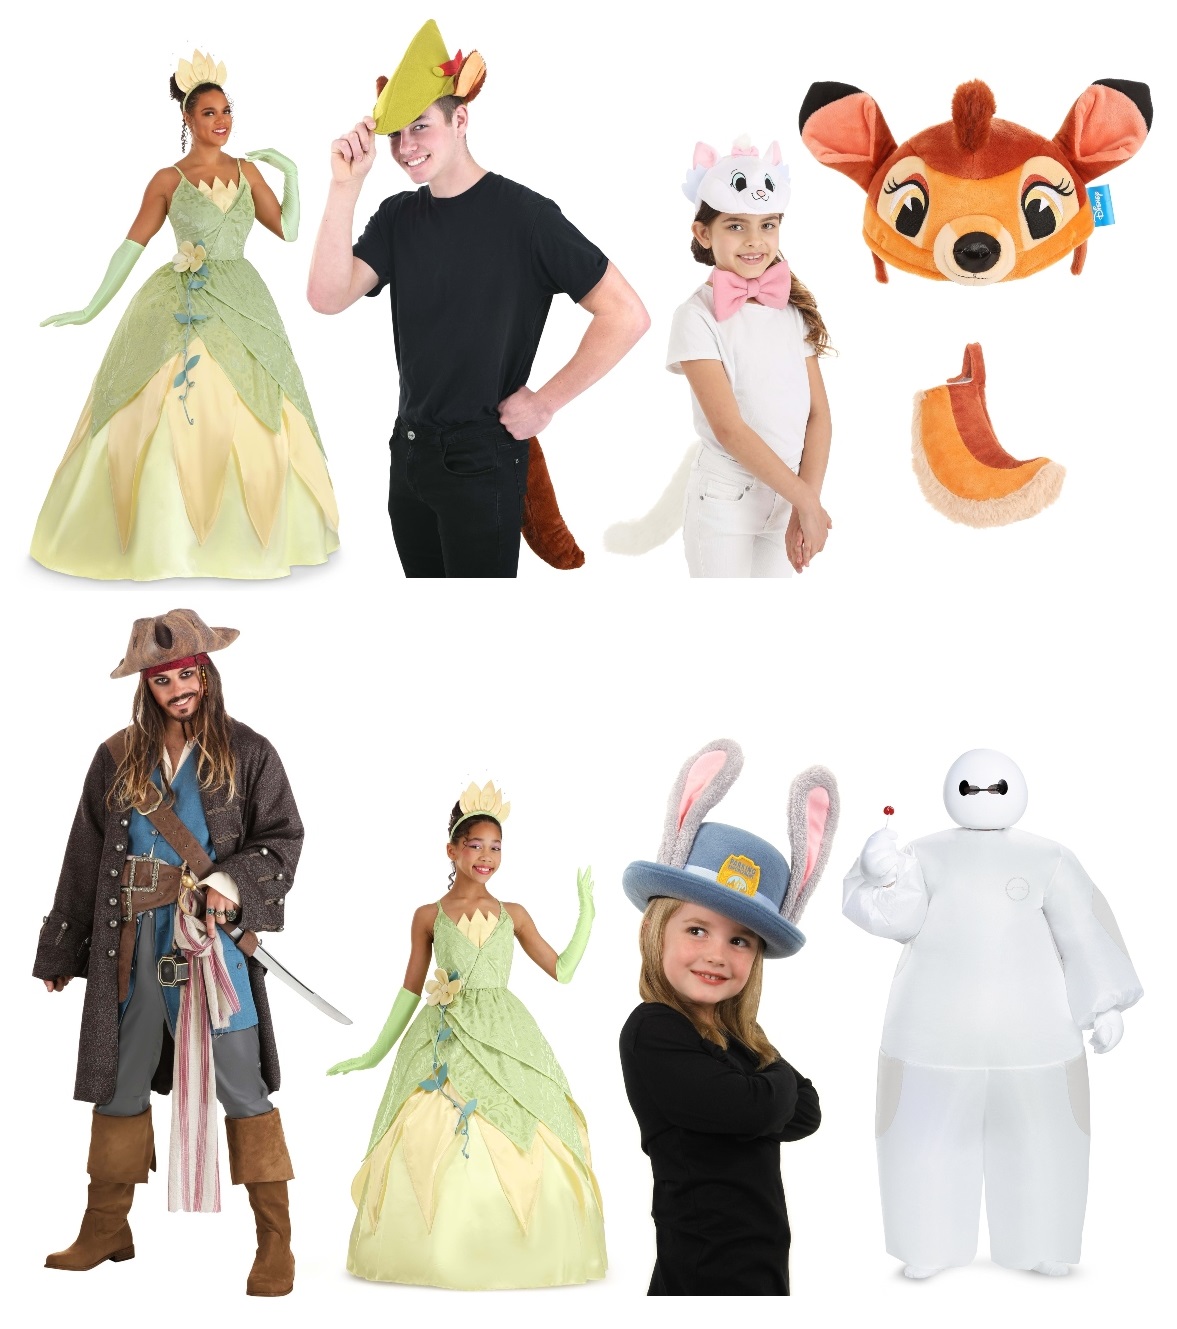 Other Disney Costume Ideas